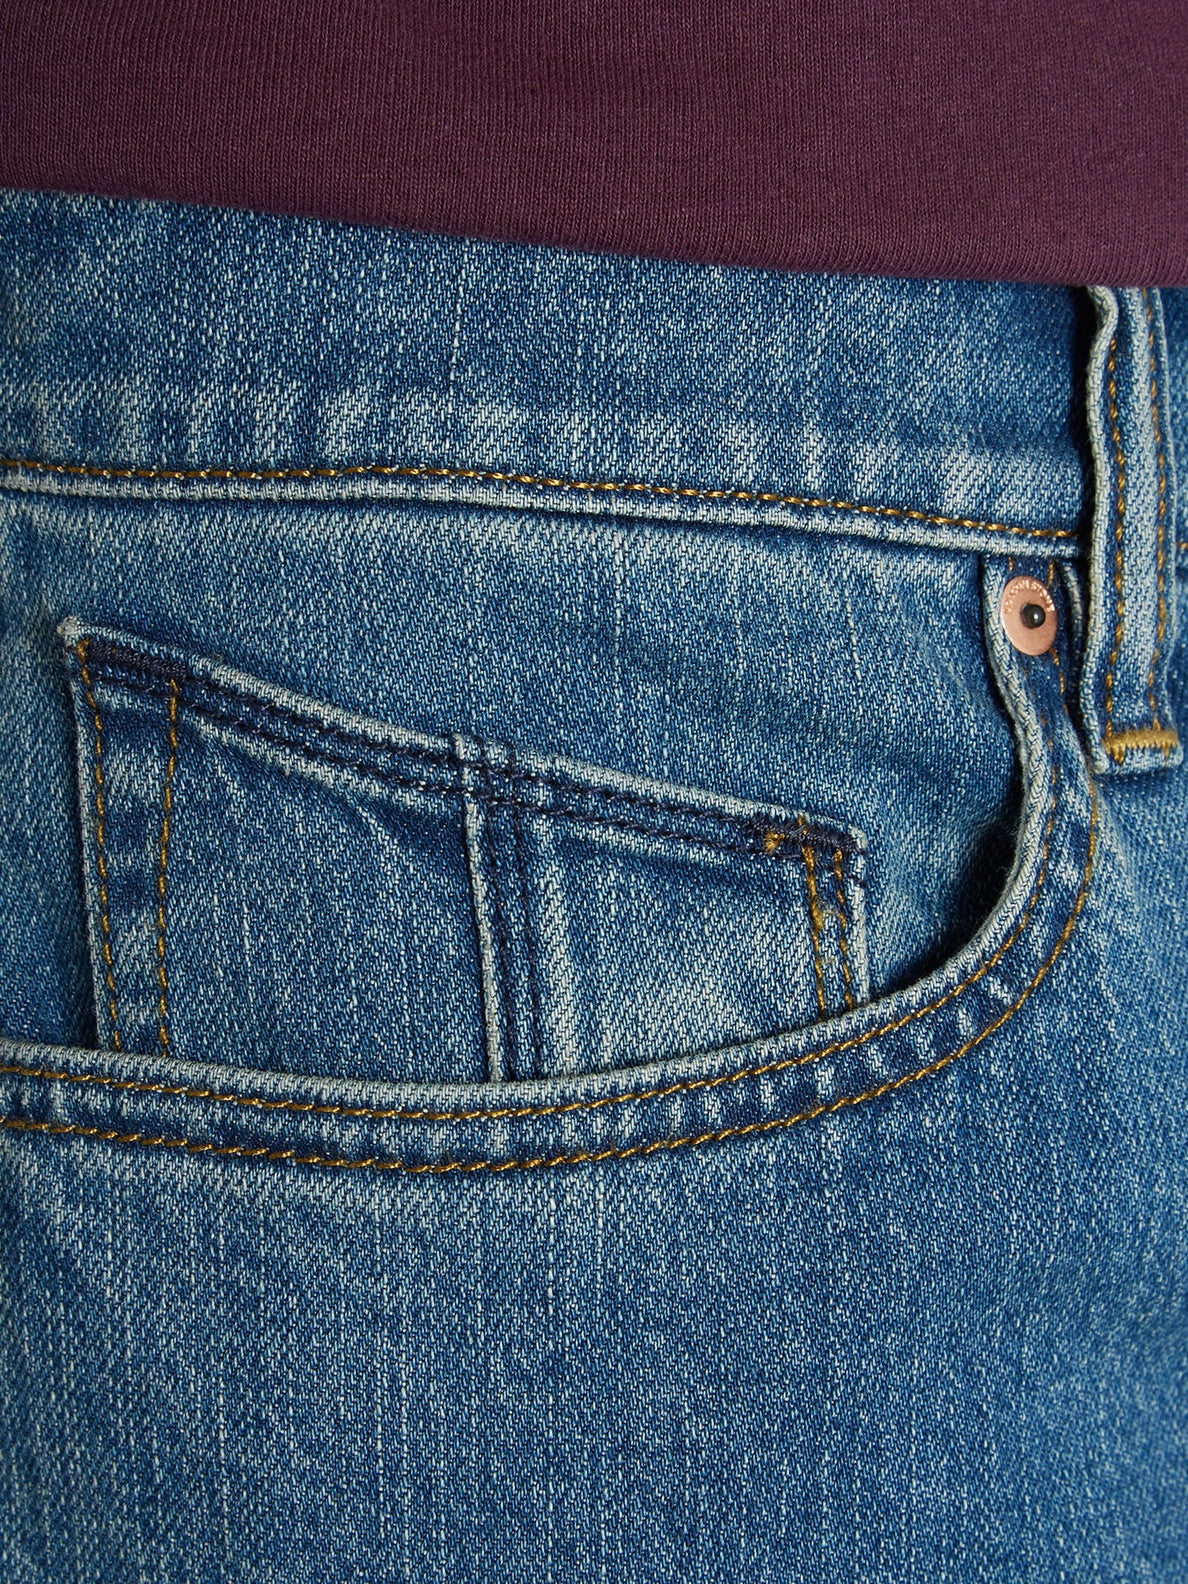 Volcom Solver Denim Jeans – Aged Indigo